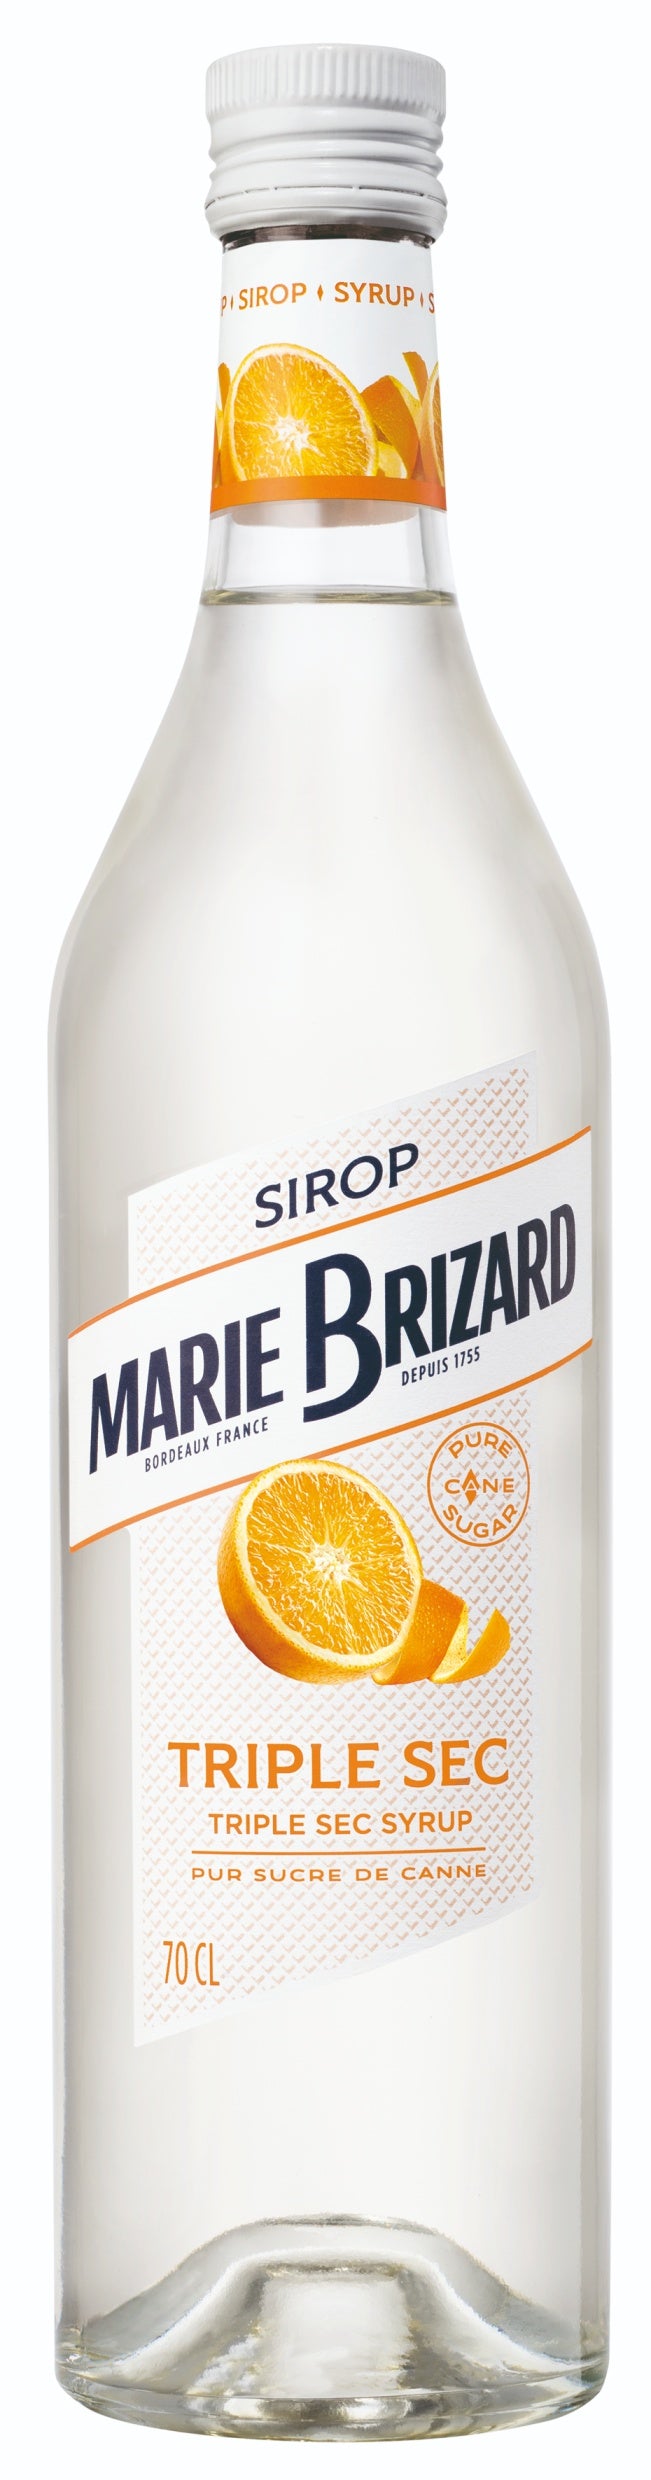 MARIE BRIZARD SIROP TRIPLE SEC 70CL